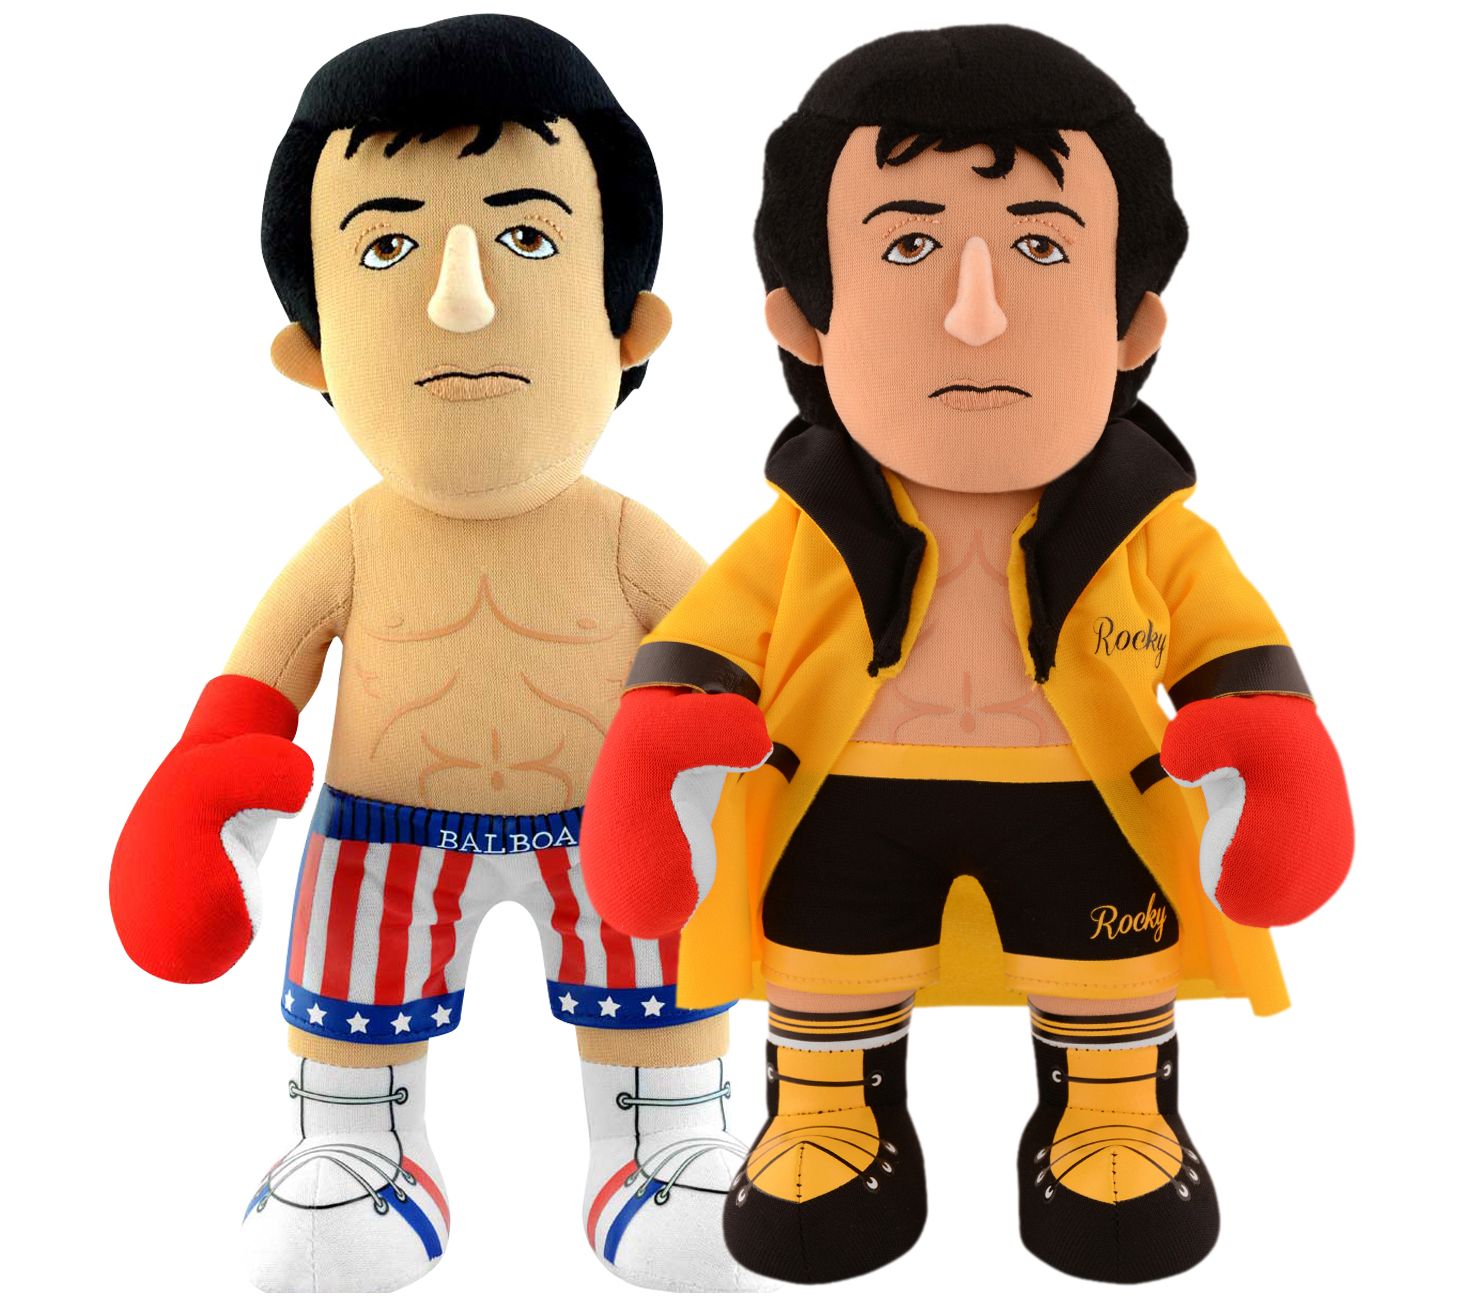 Rocky Balboa, Art Toys